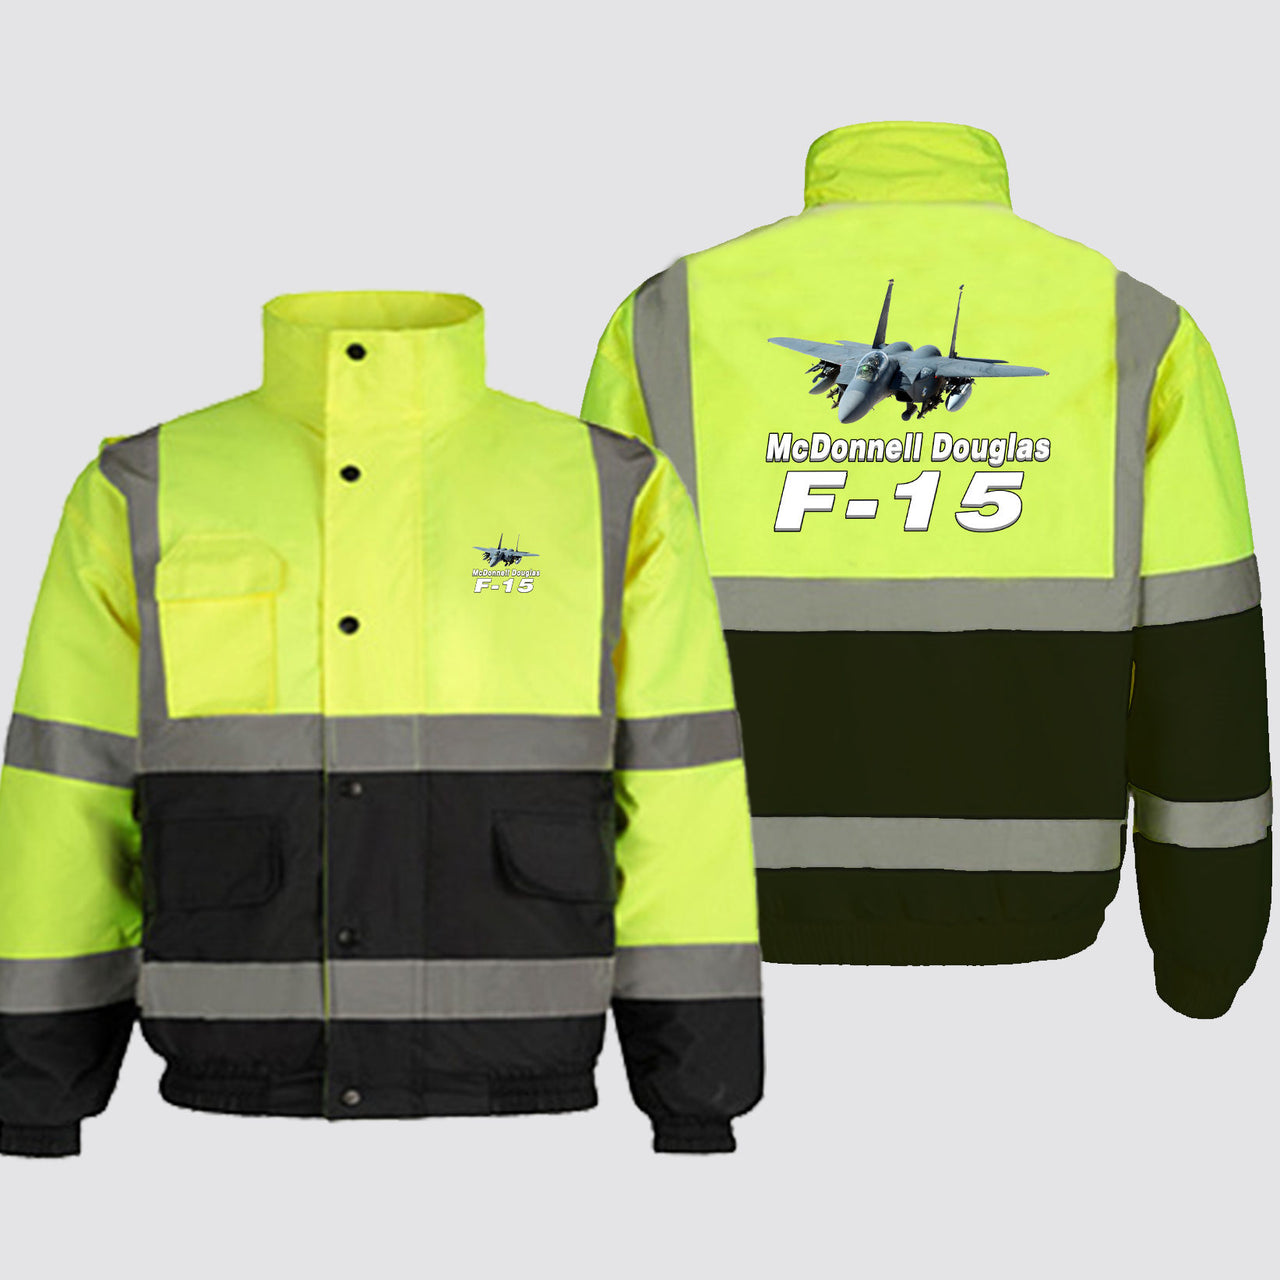 The McDonnell Douglas F15 Designed Reflective Winter Jackets